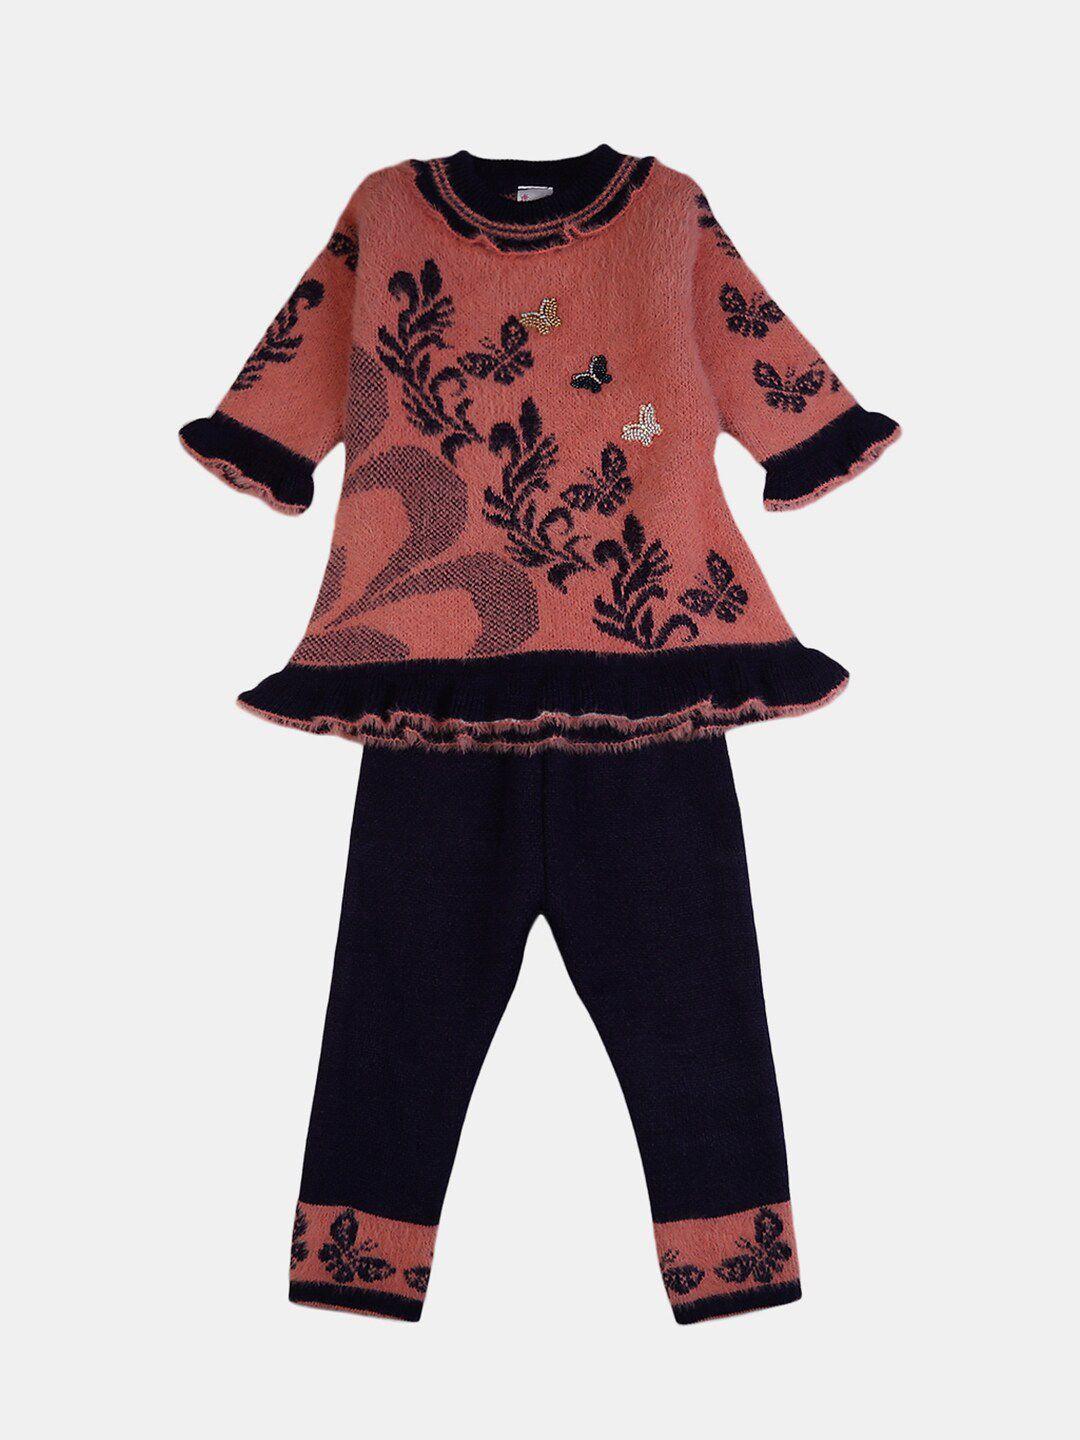 v-mart girls brown & black printed pure cotton top with pyjamas